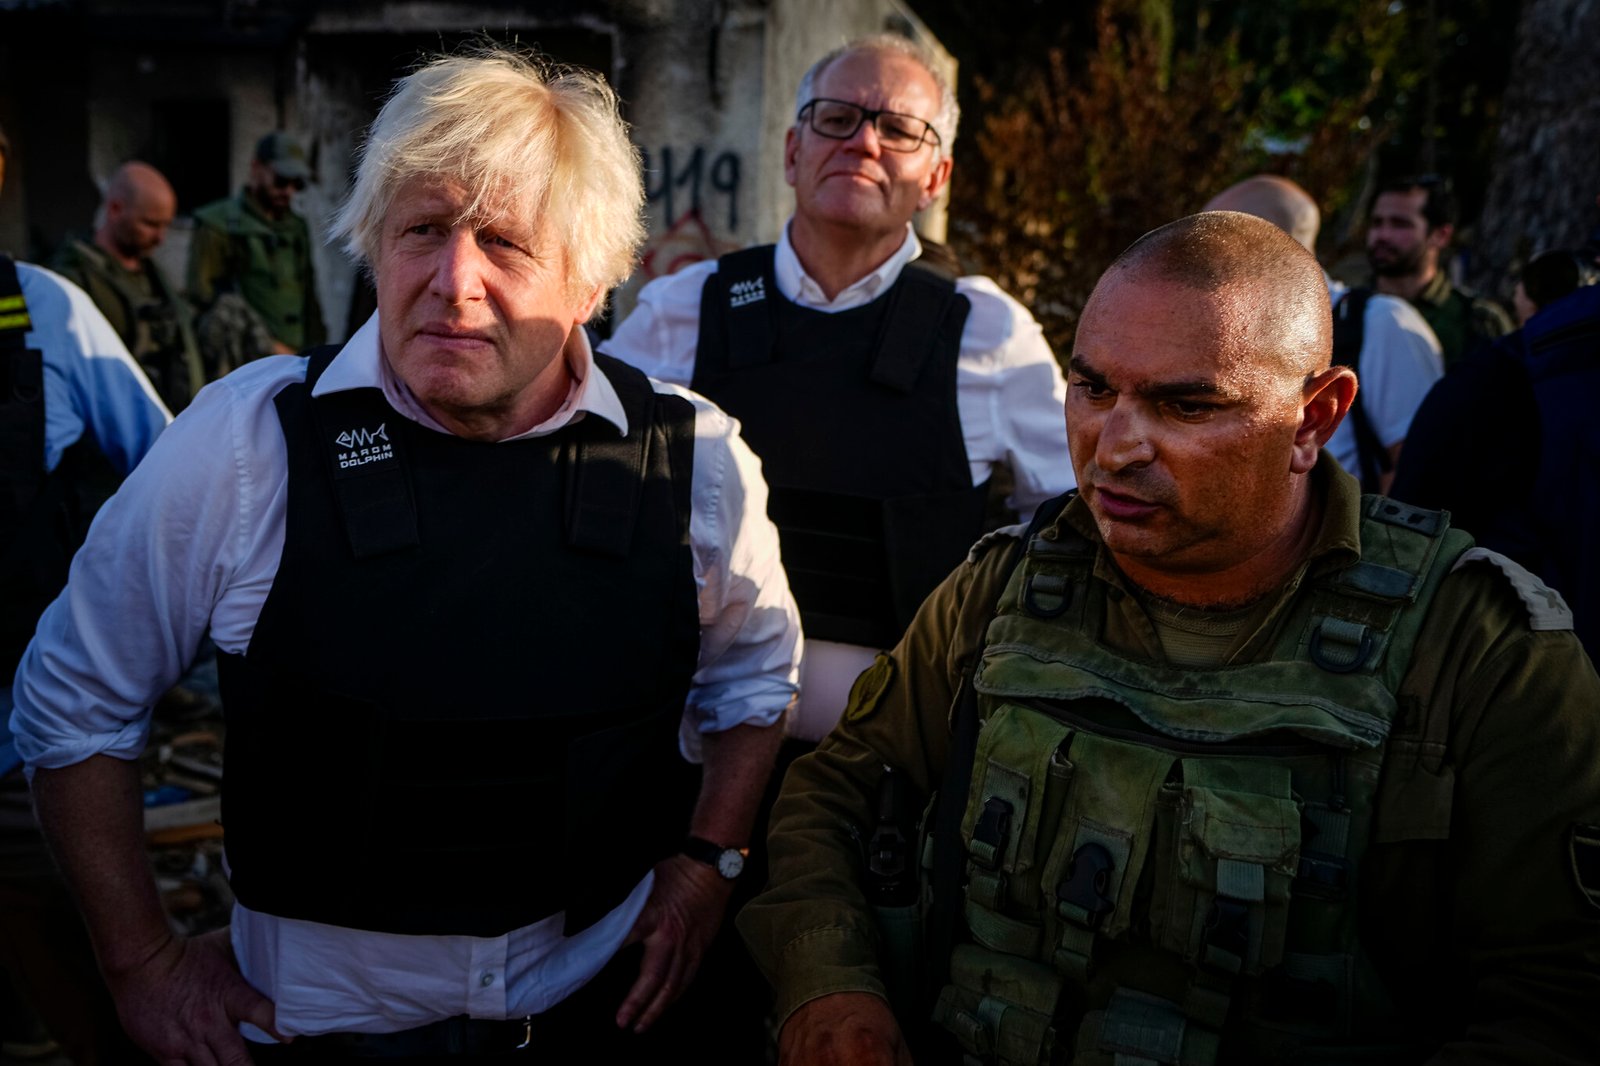 Scott Morrison lands in Israel on solidarity visit with Boris Johnson